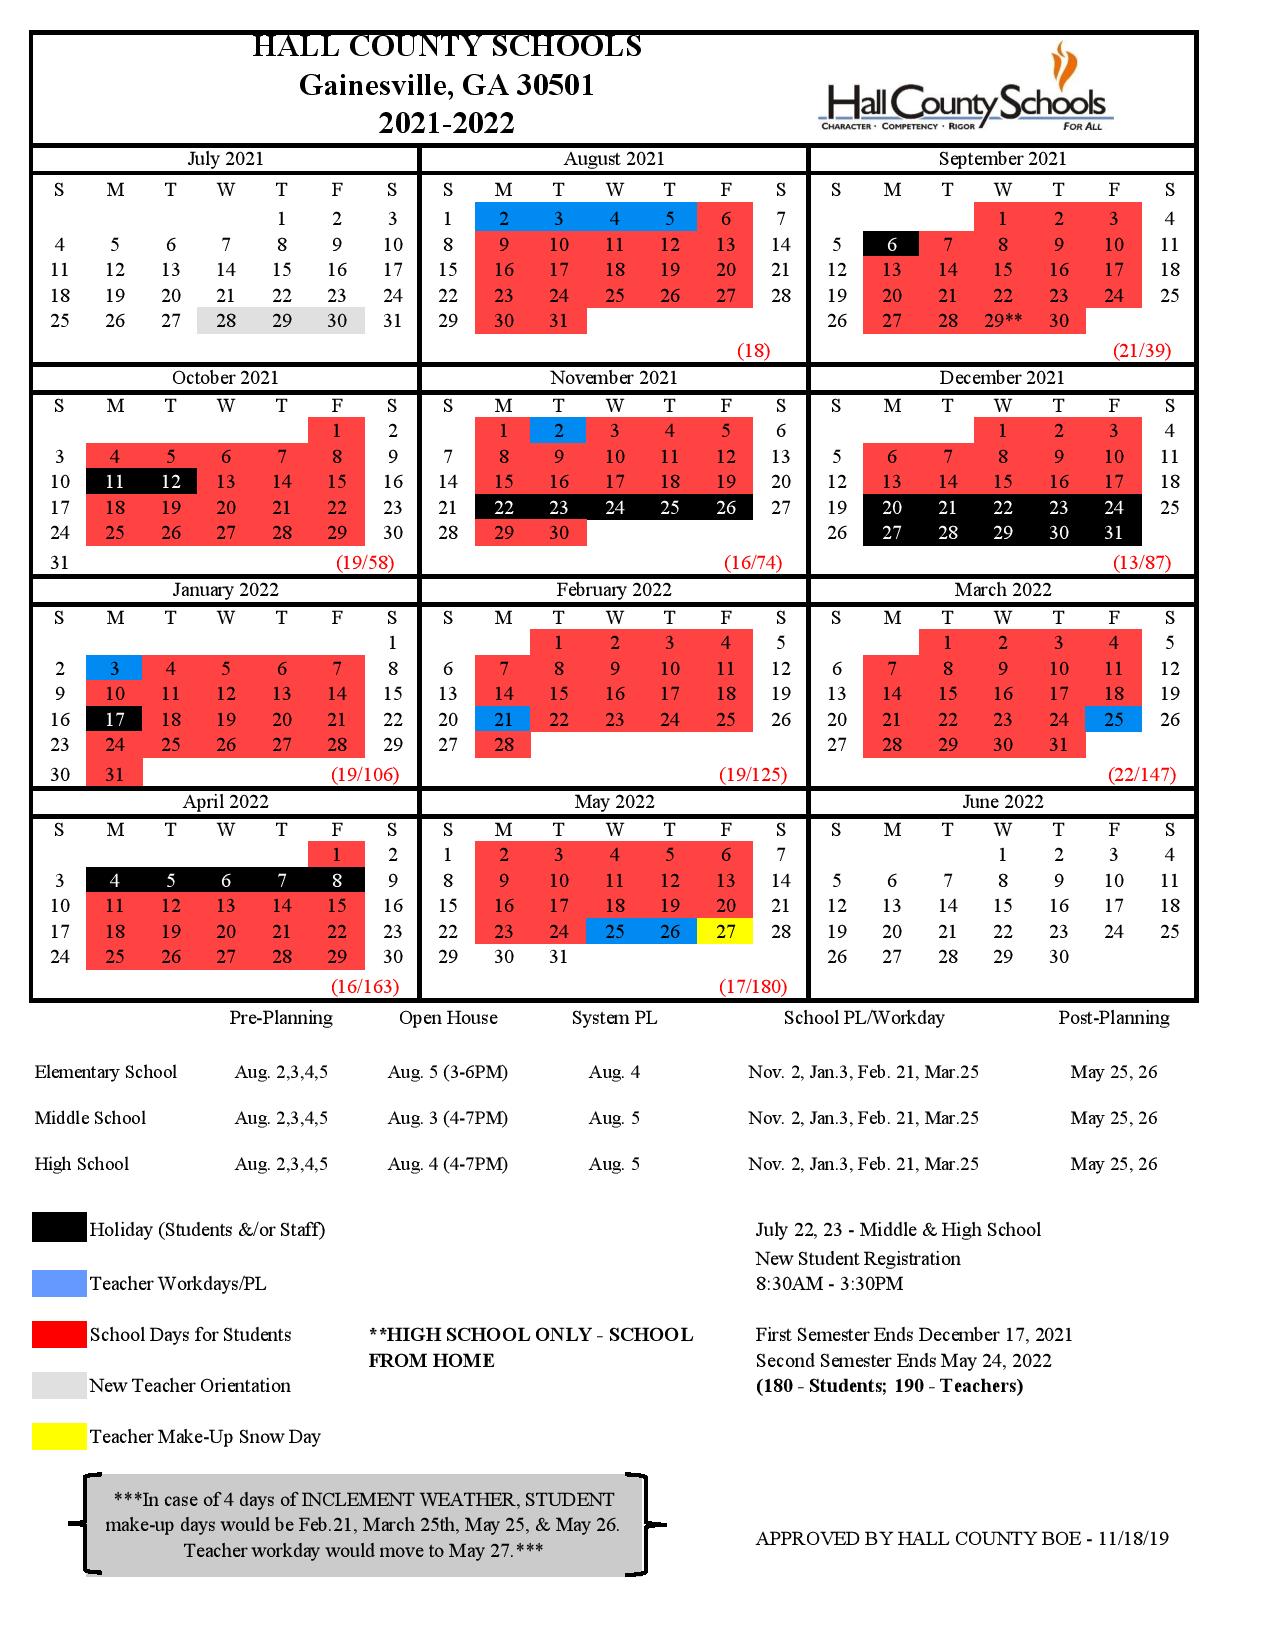 Hall County Schools Calendar 2021 2022 Holidays